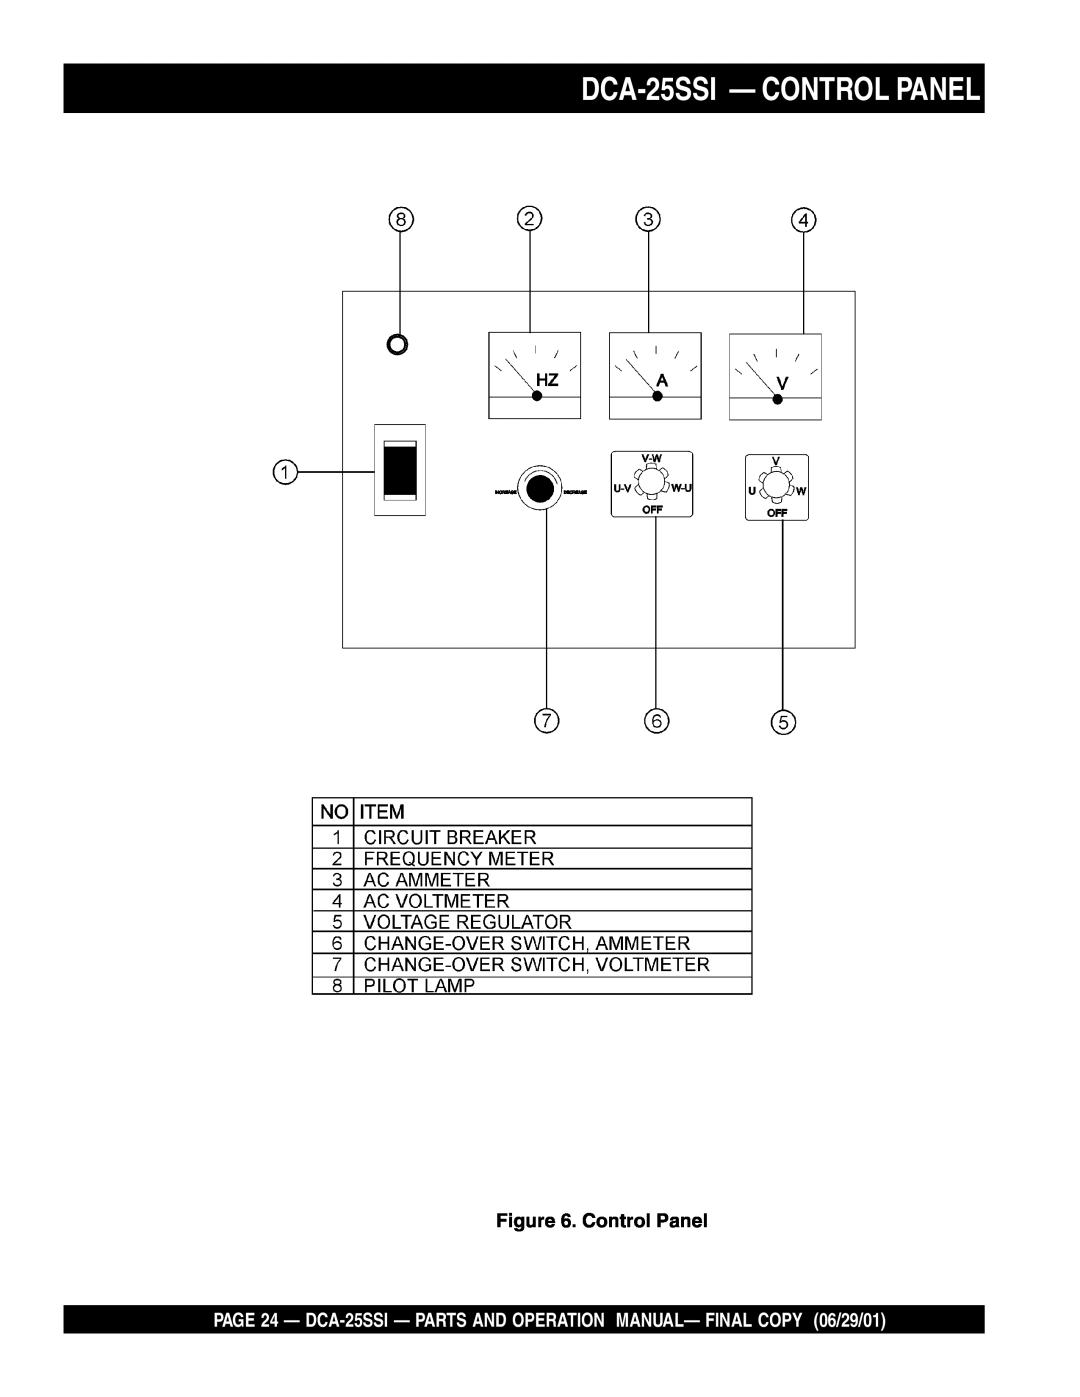 Multiquip operation manual DCA-25SSI— CONTROL PANEL, Control Panel 